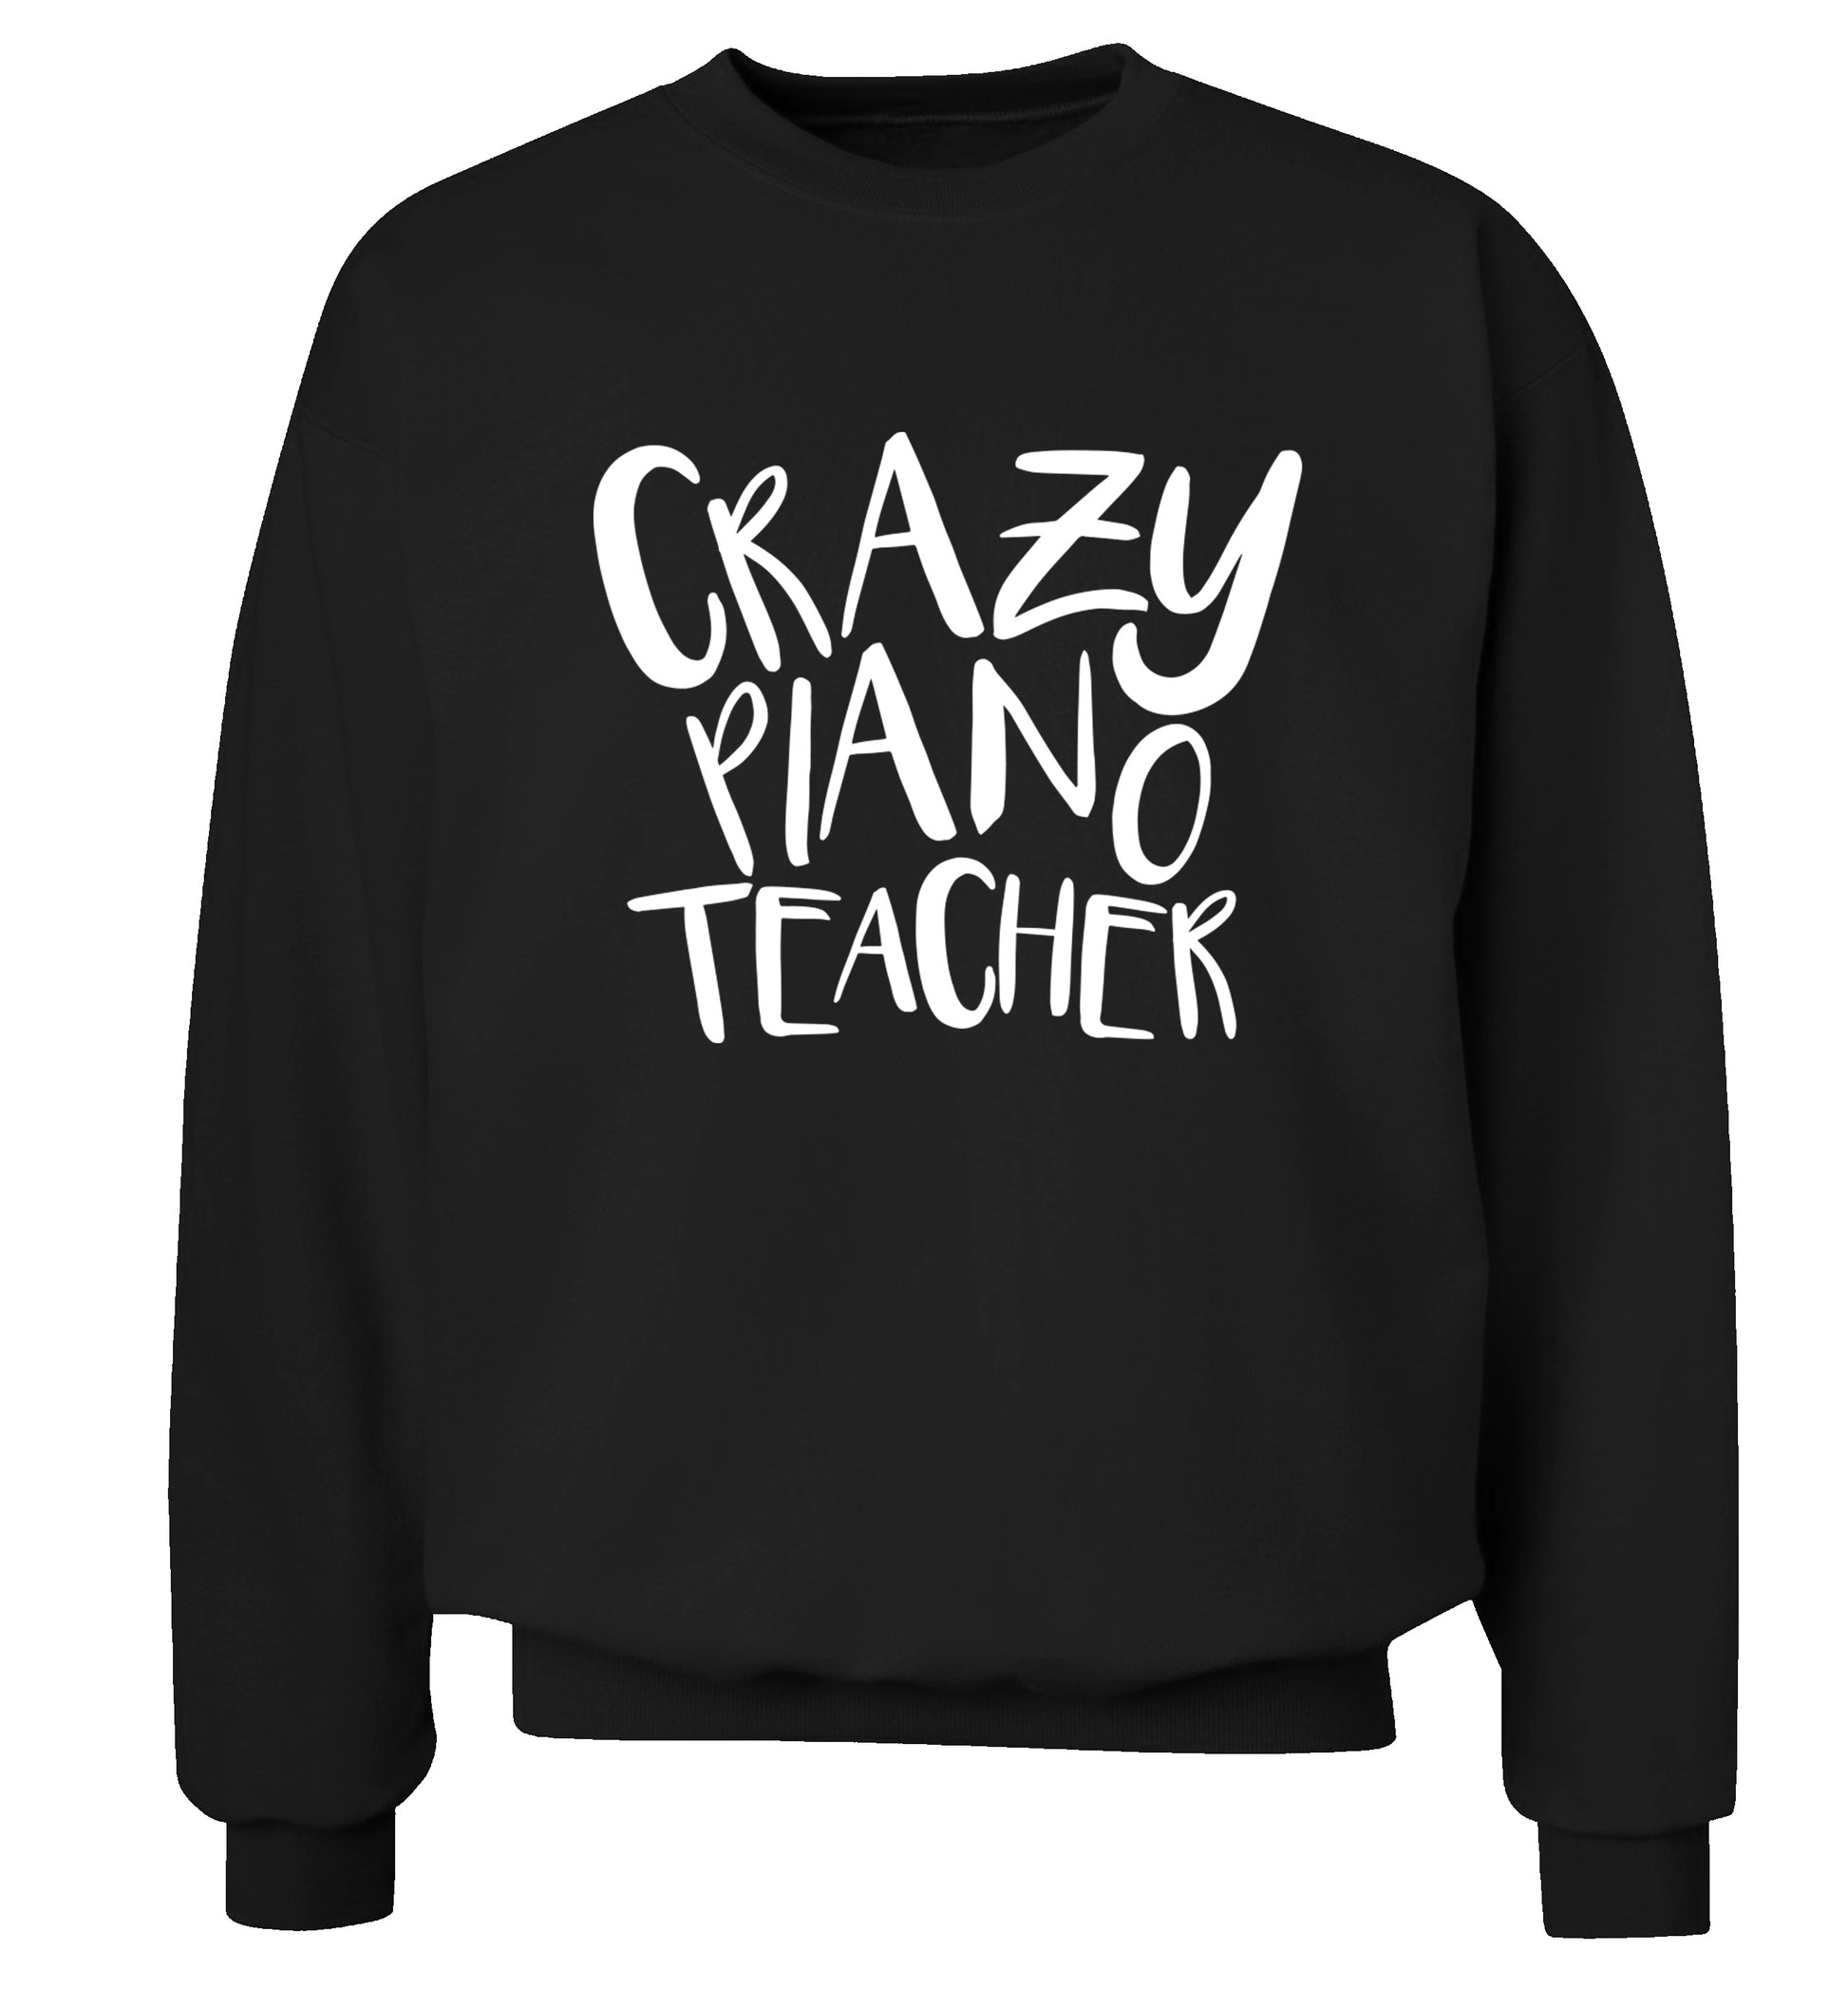 Crazy piano teacher Adult's unisex black Sweater 2XL